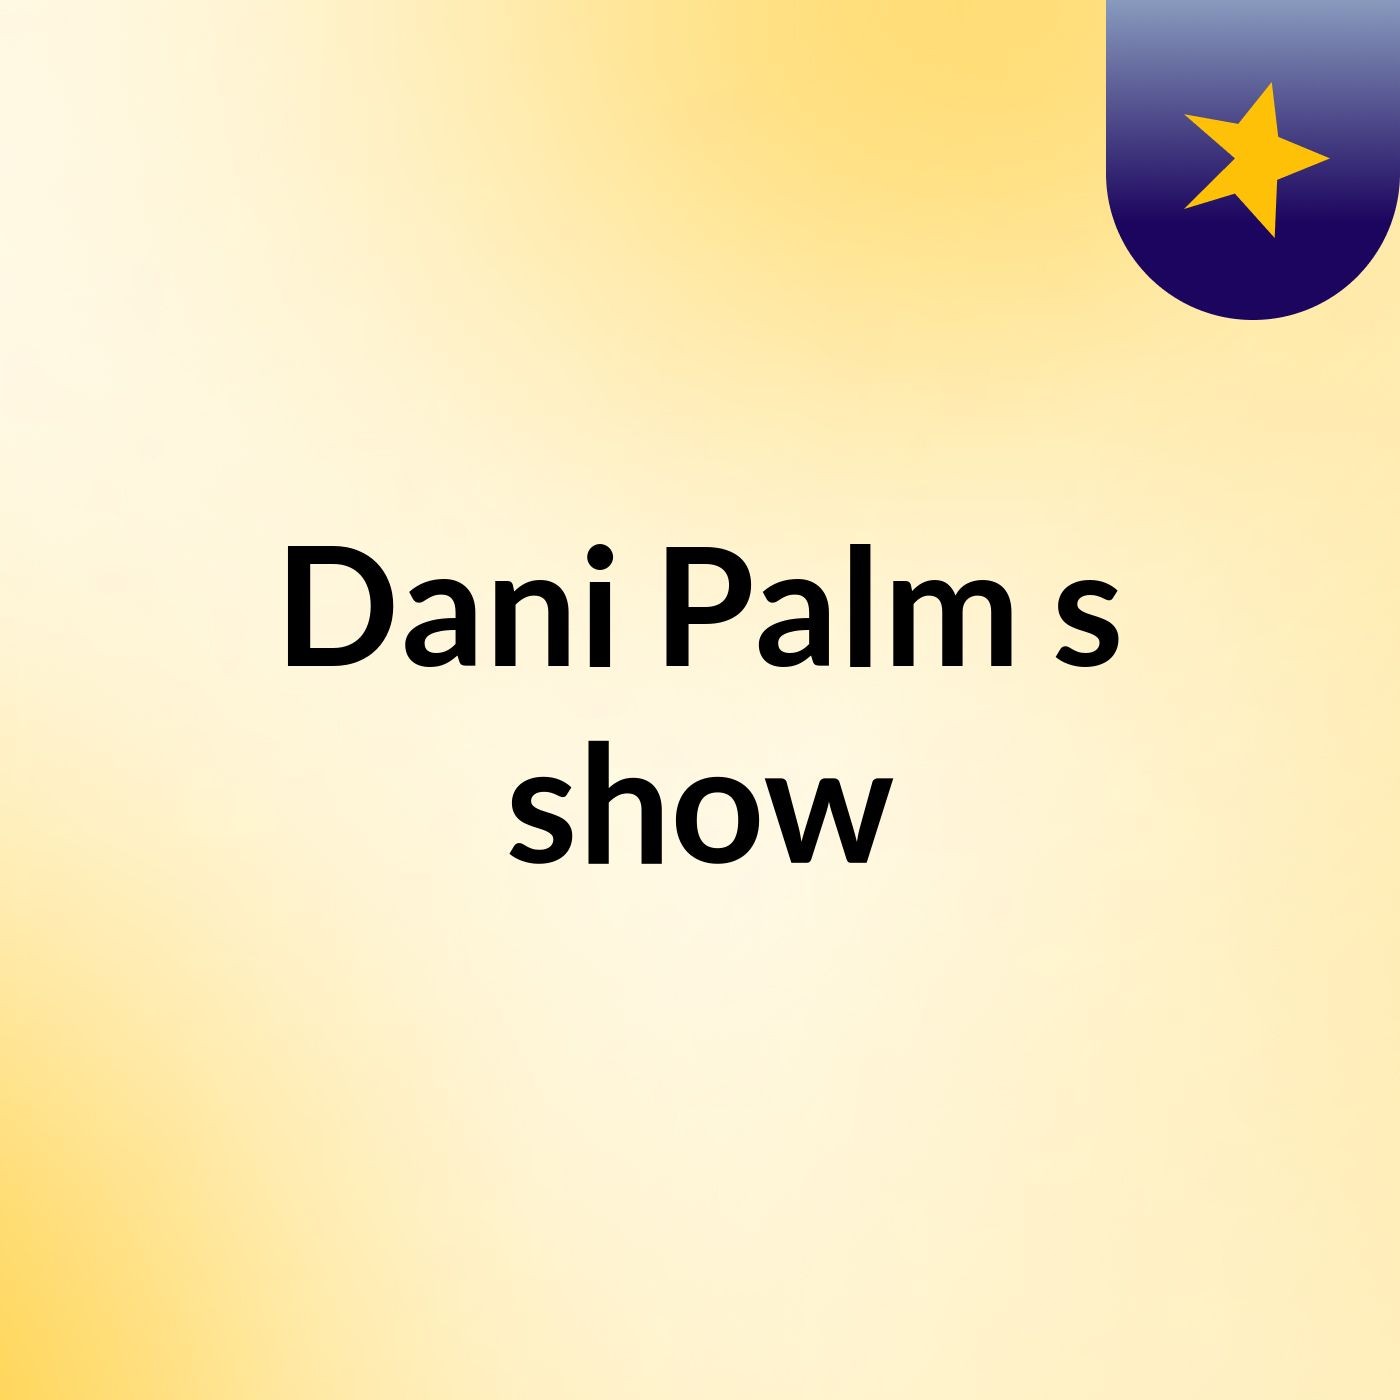 Dani Palm's show